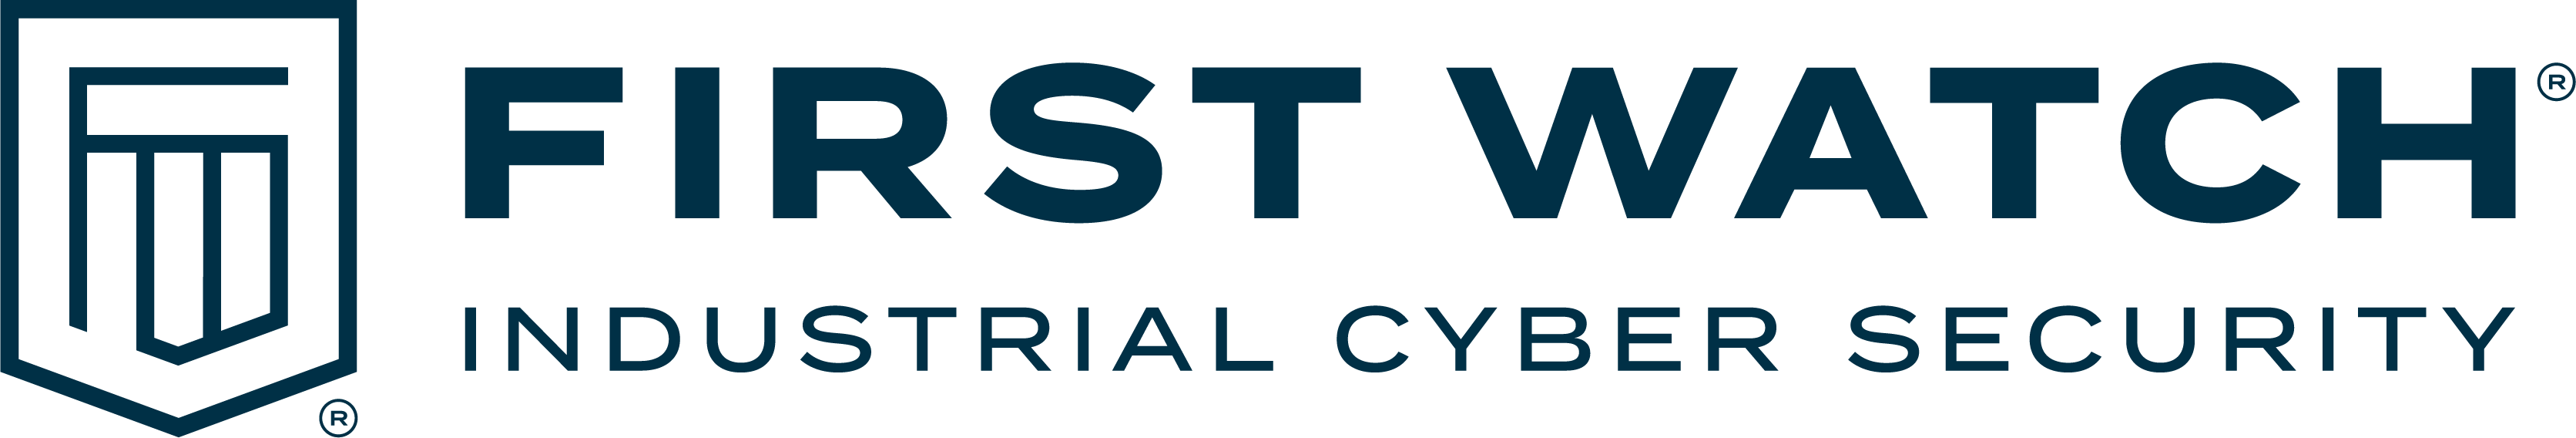 FIRSTWATCH-logo